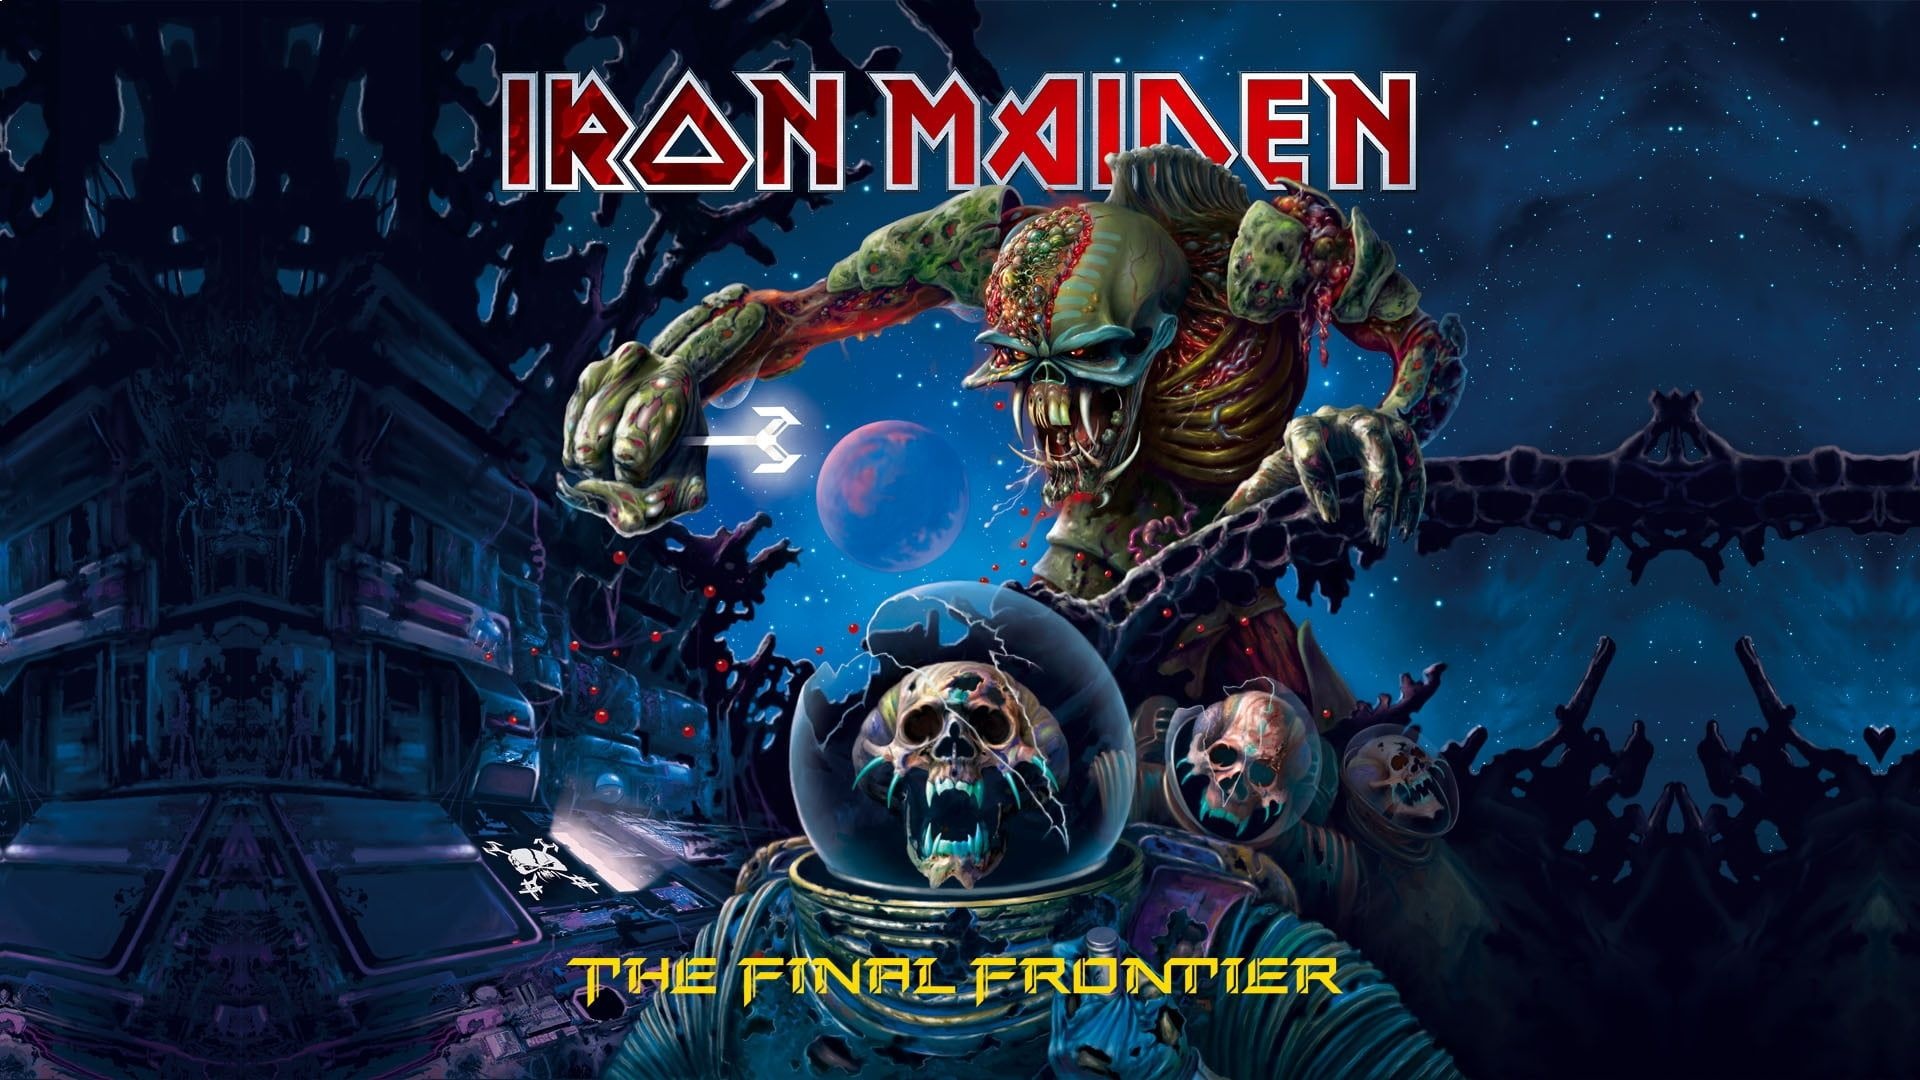 Iron Maiden Band Music, The Final Frontier album, Epic sci-fi concept, Intergalactic journey, 1920x1080 Full HD Desktop